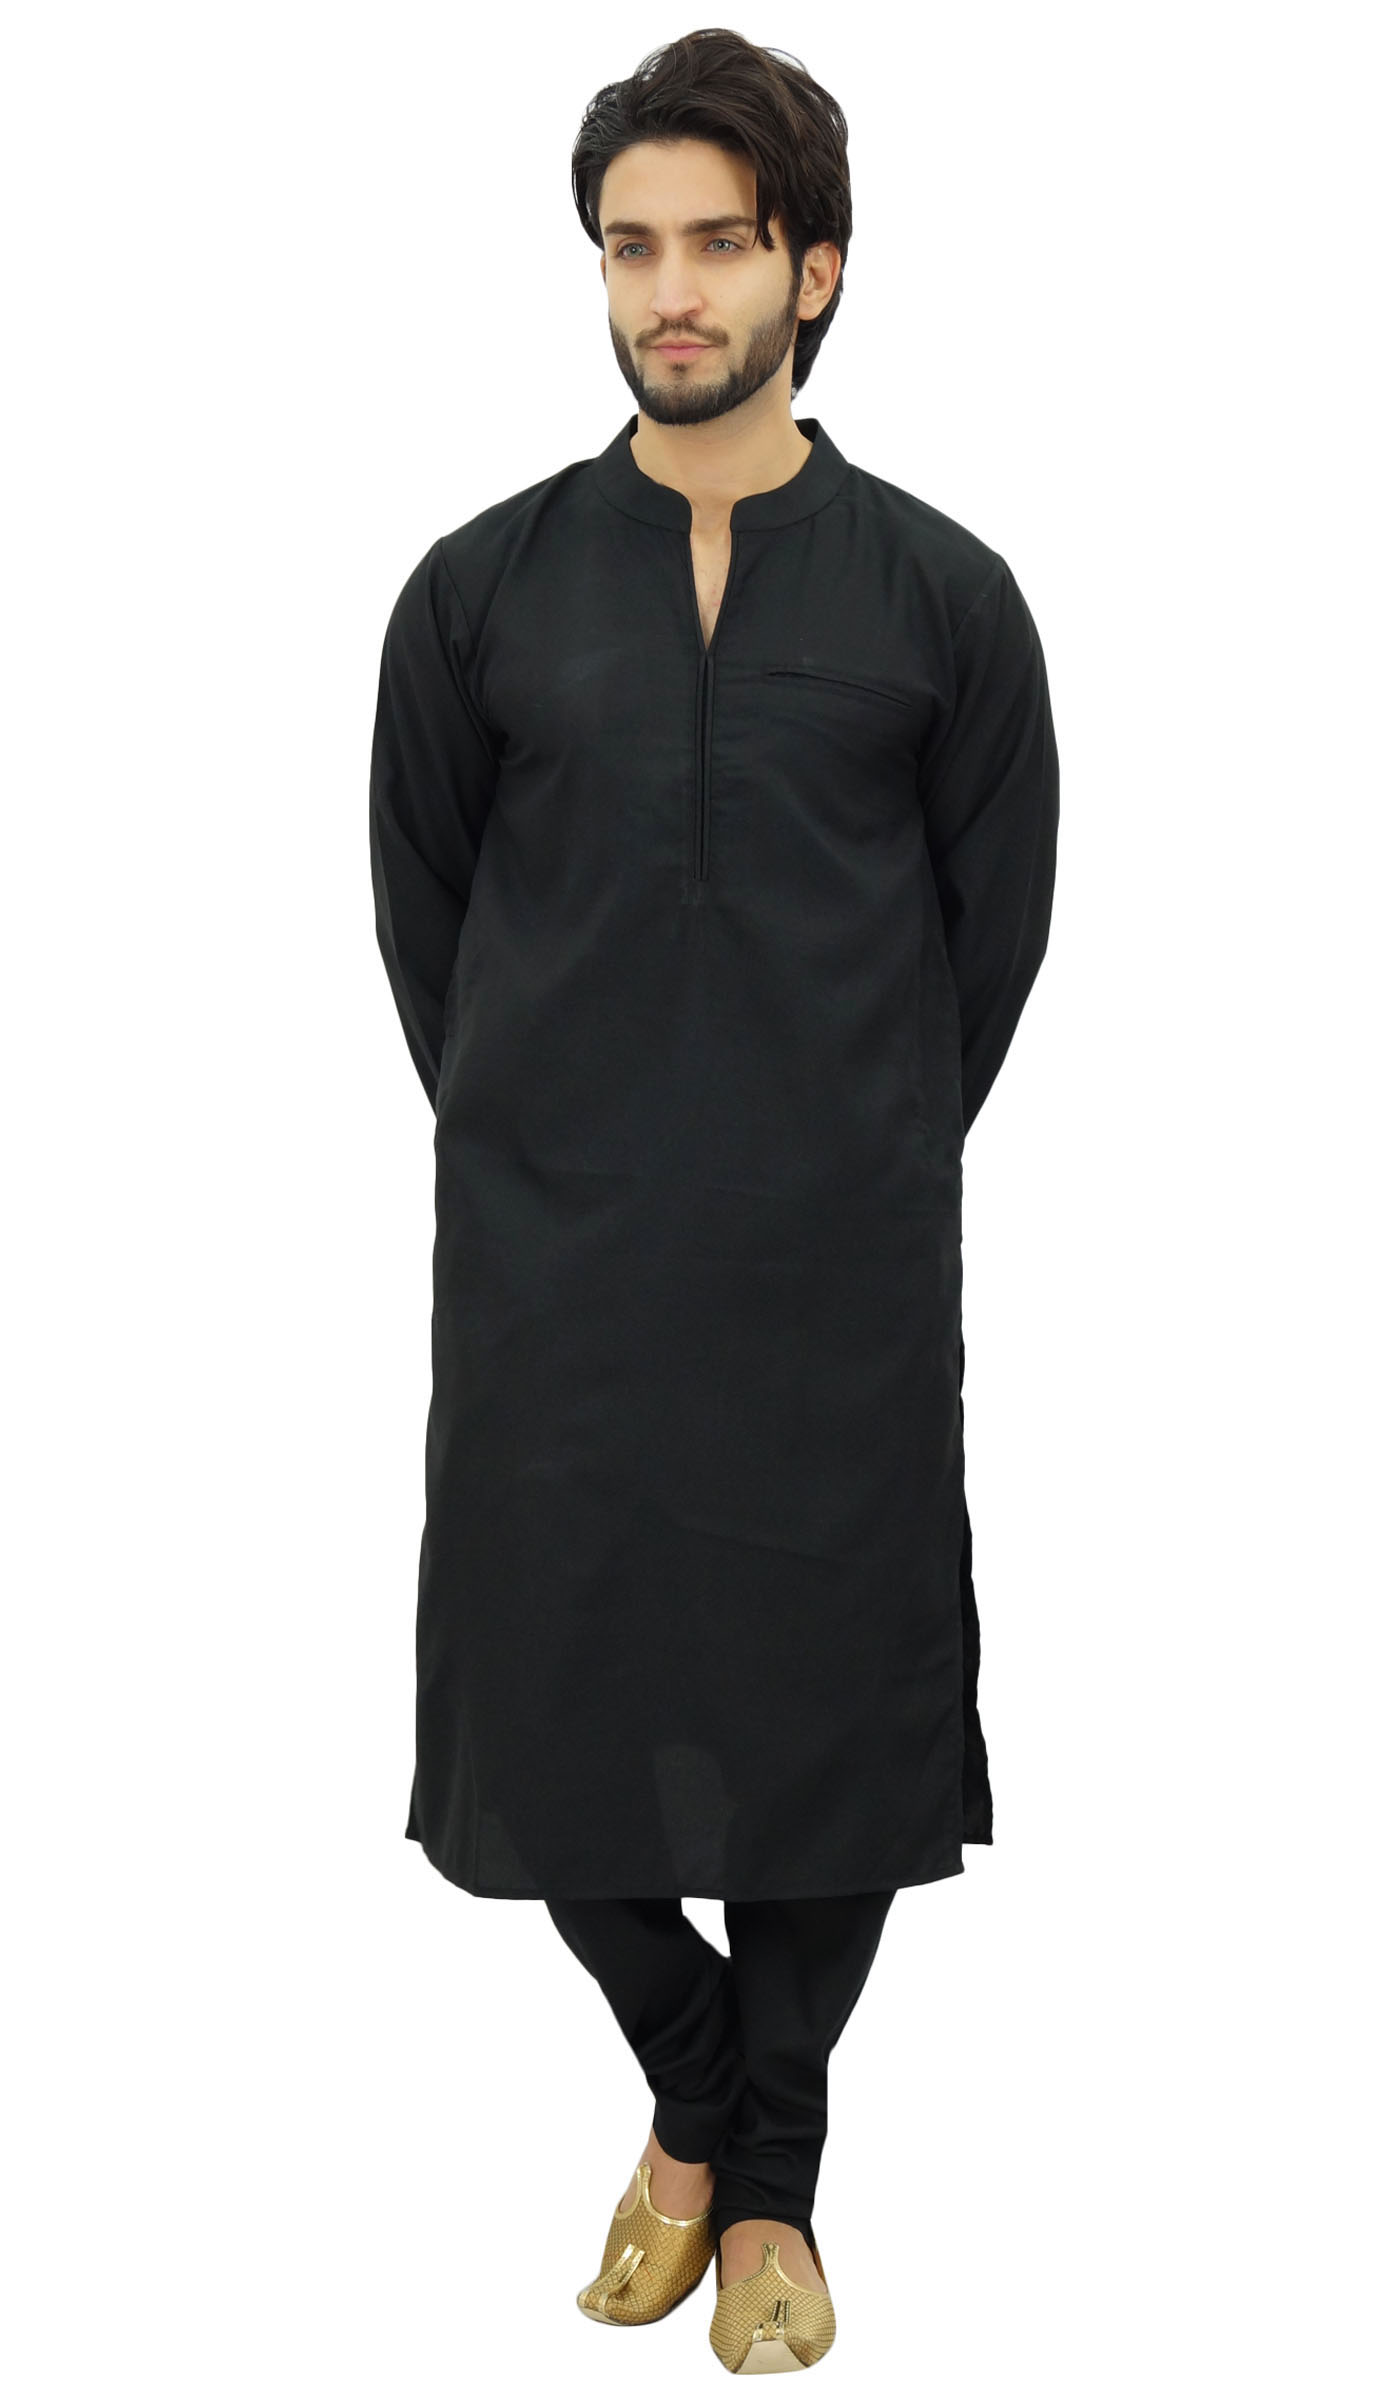 Black Punjabi Design - Colorful Punjabi Designs - NeotericIT.com